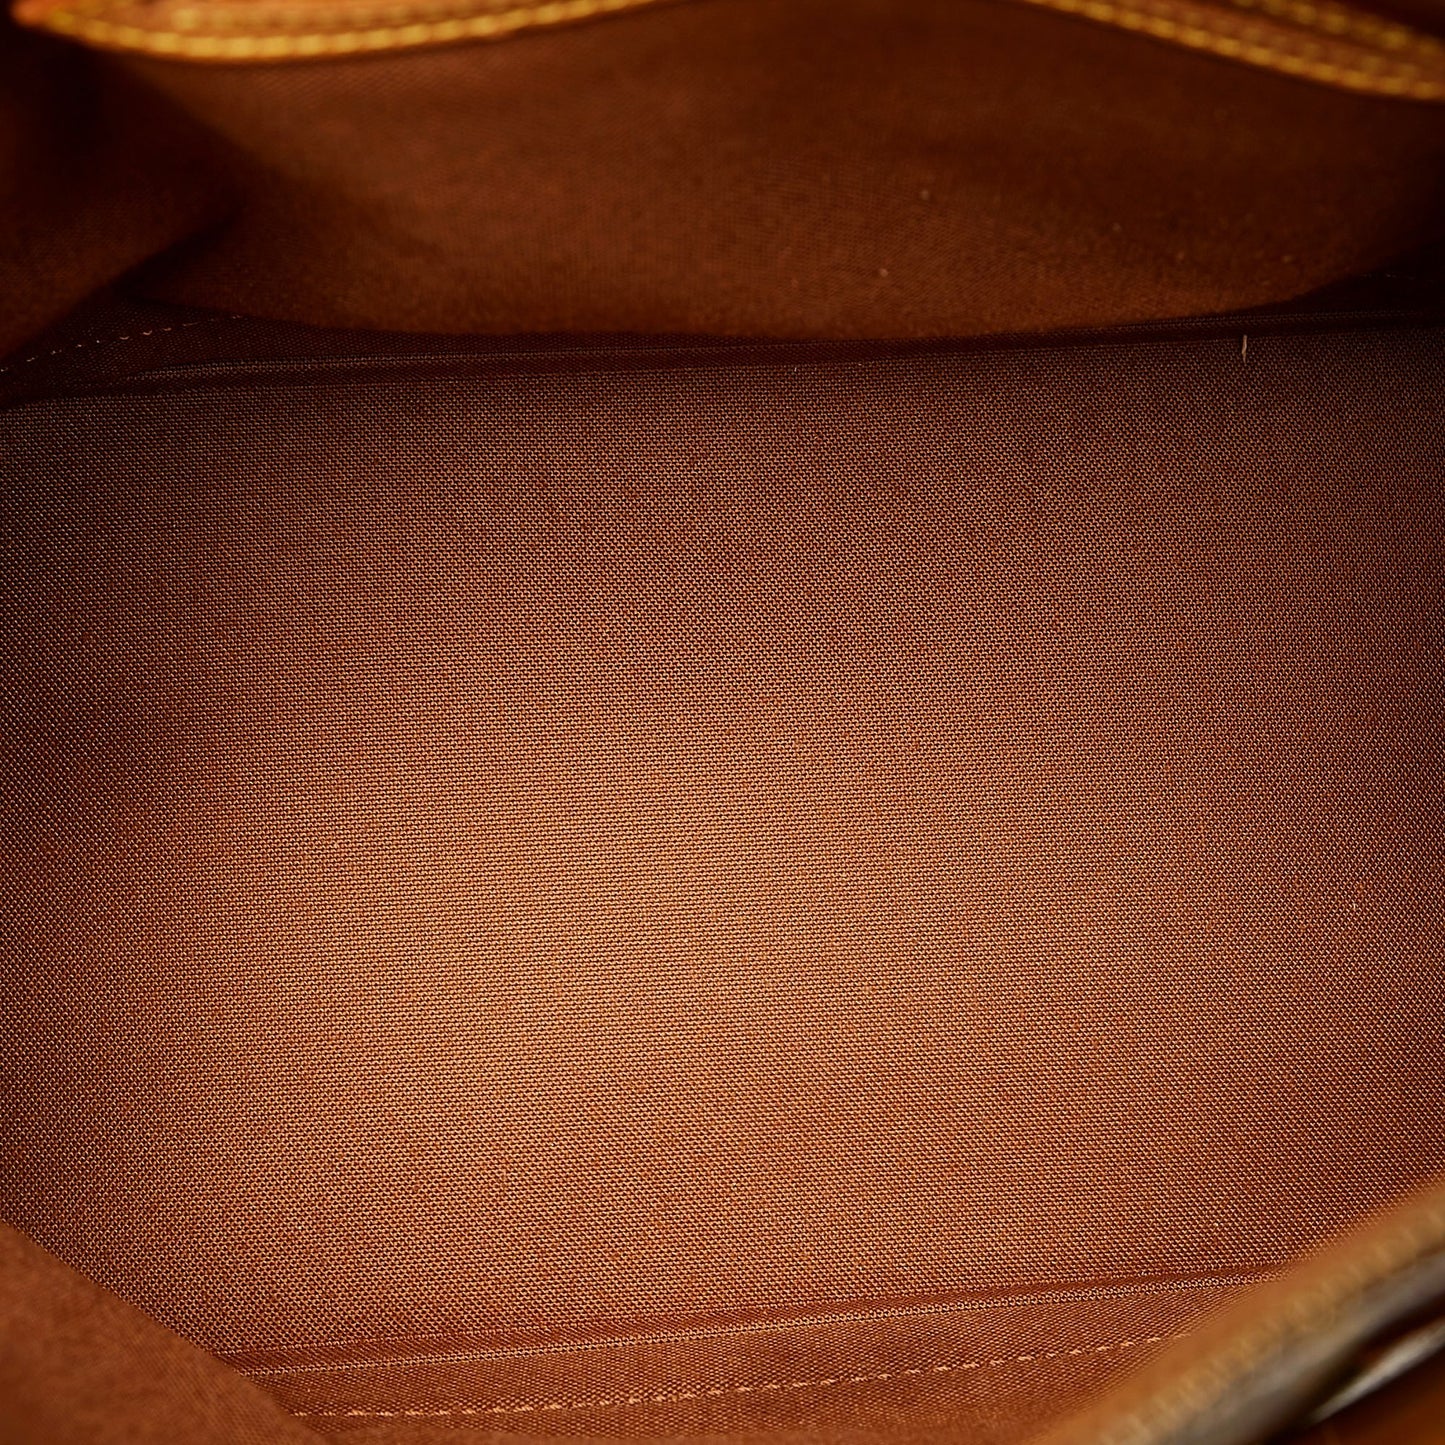 Louis Vuitton Monogram Alma PM Handbag